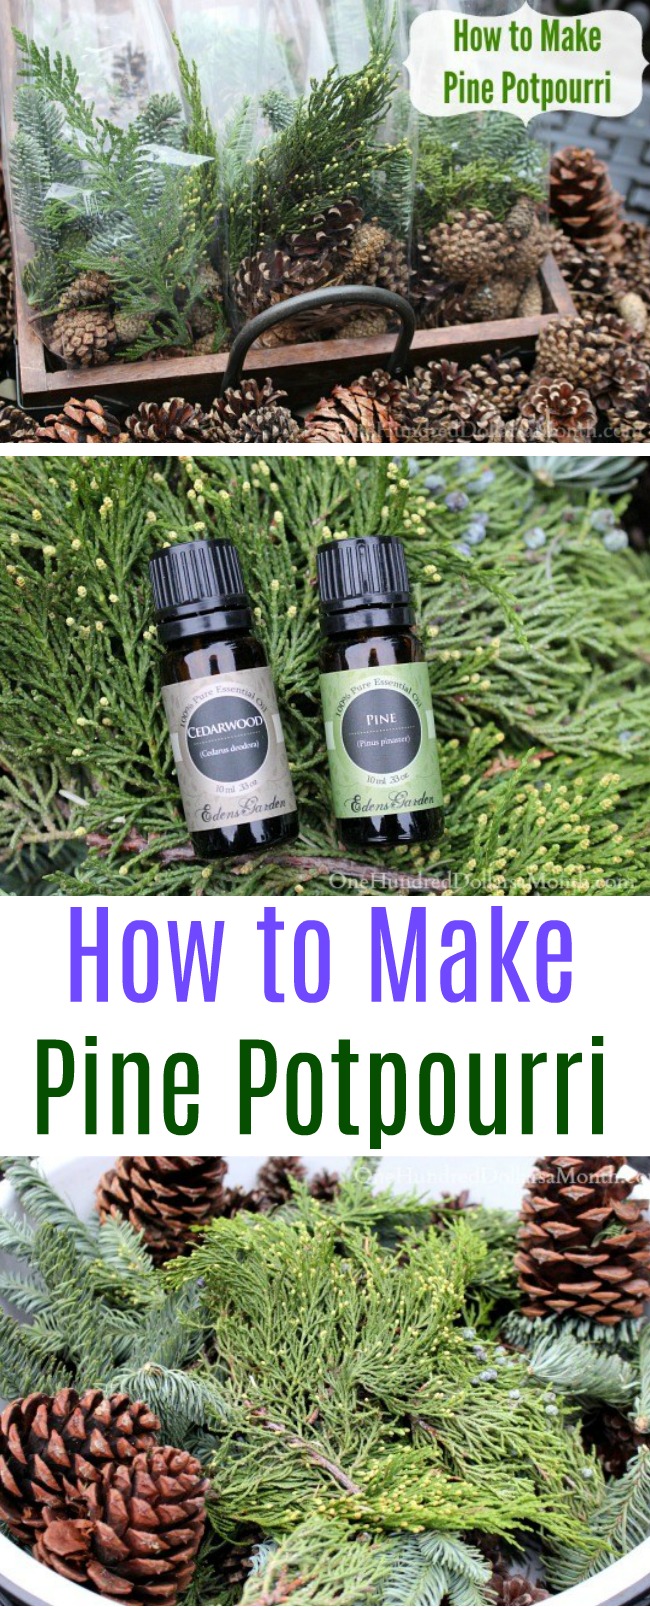 How to Make Pine Potpourri